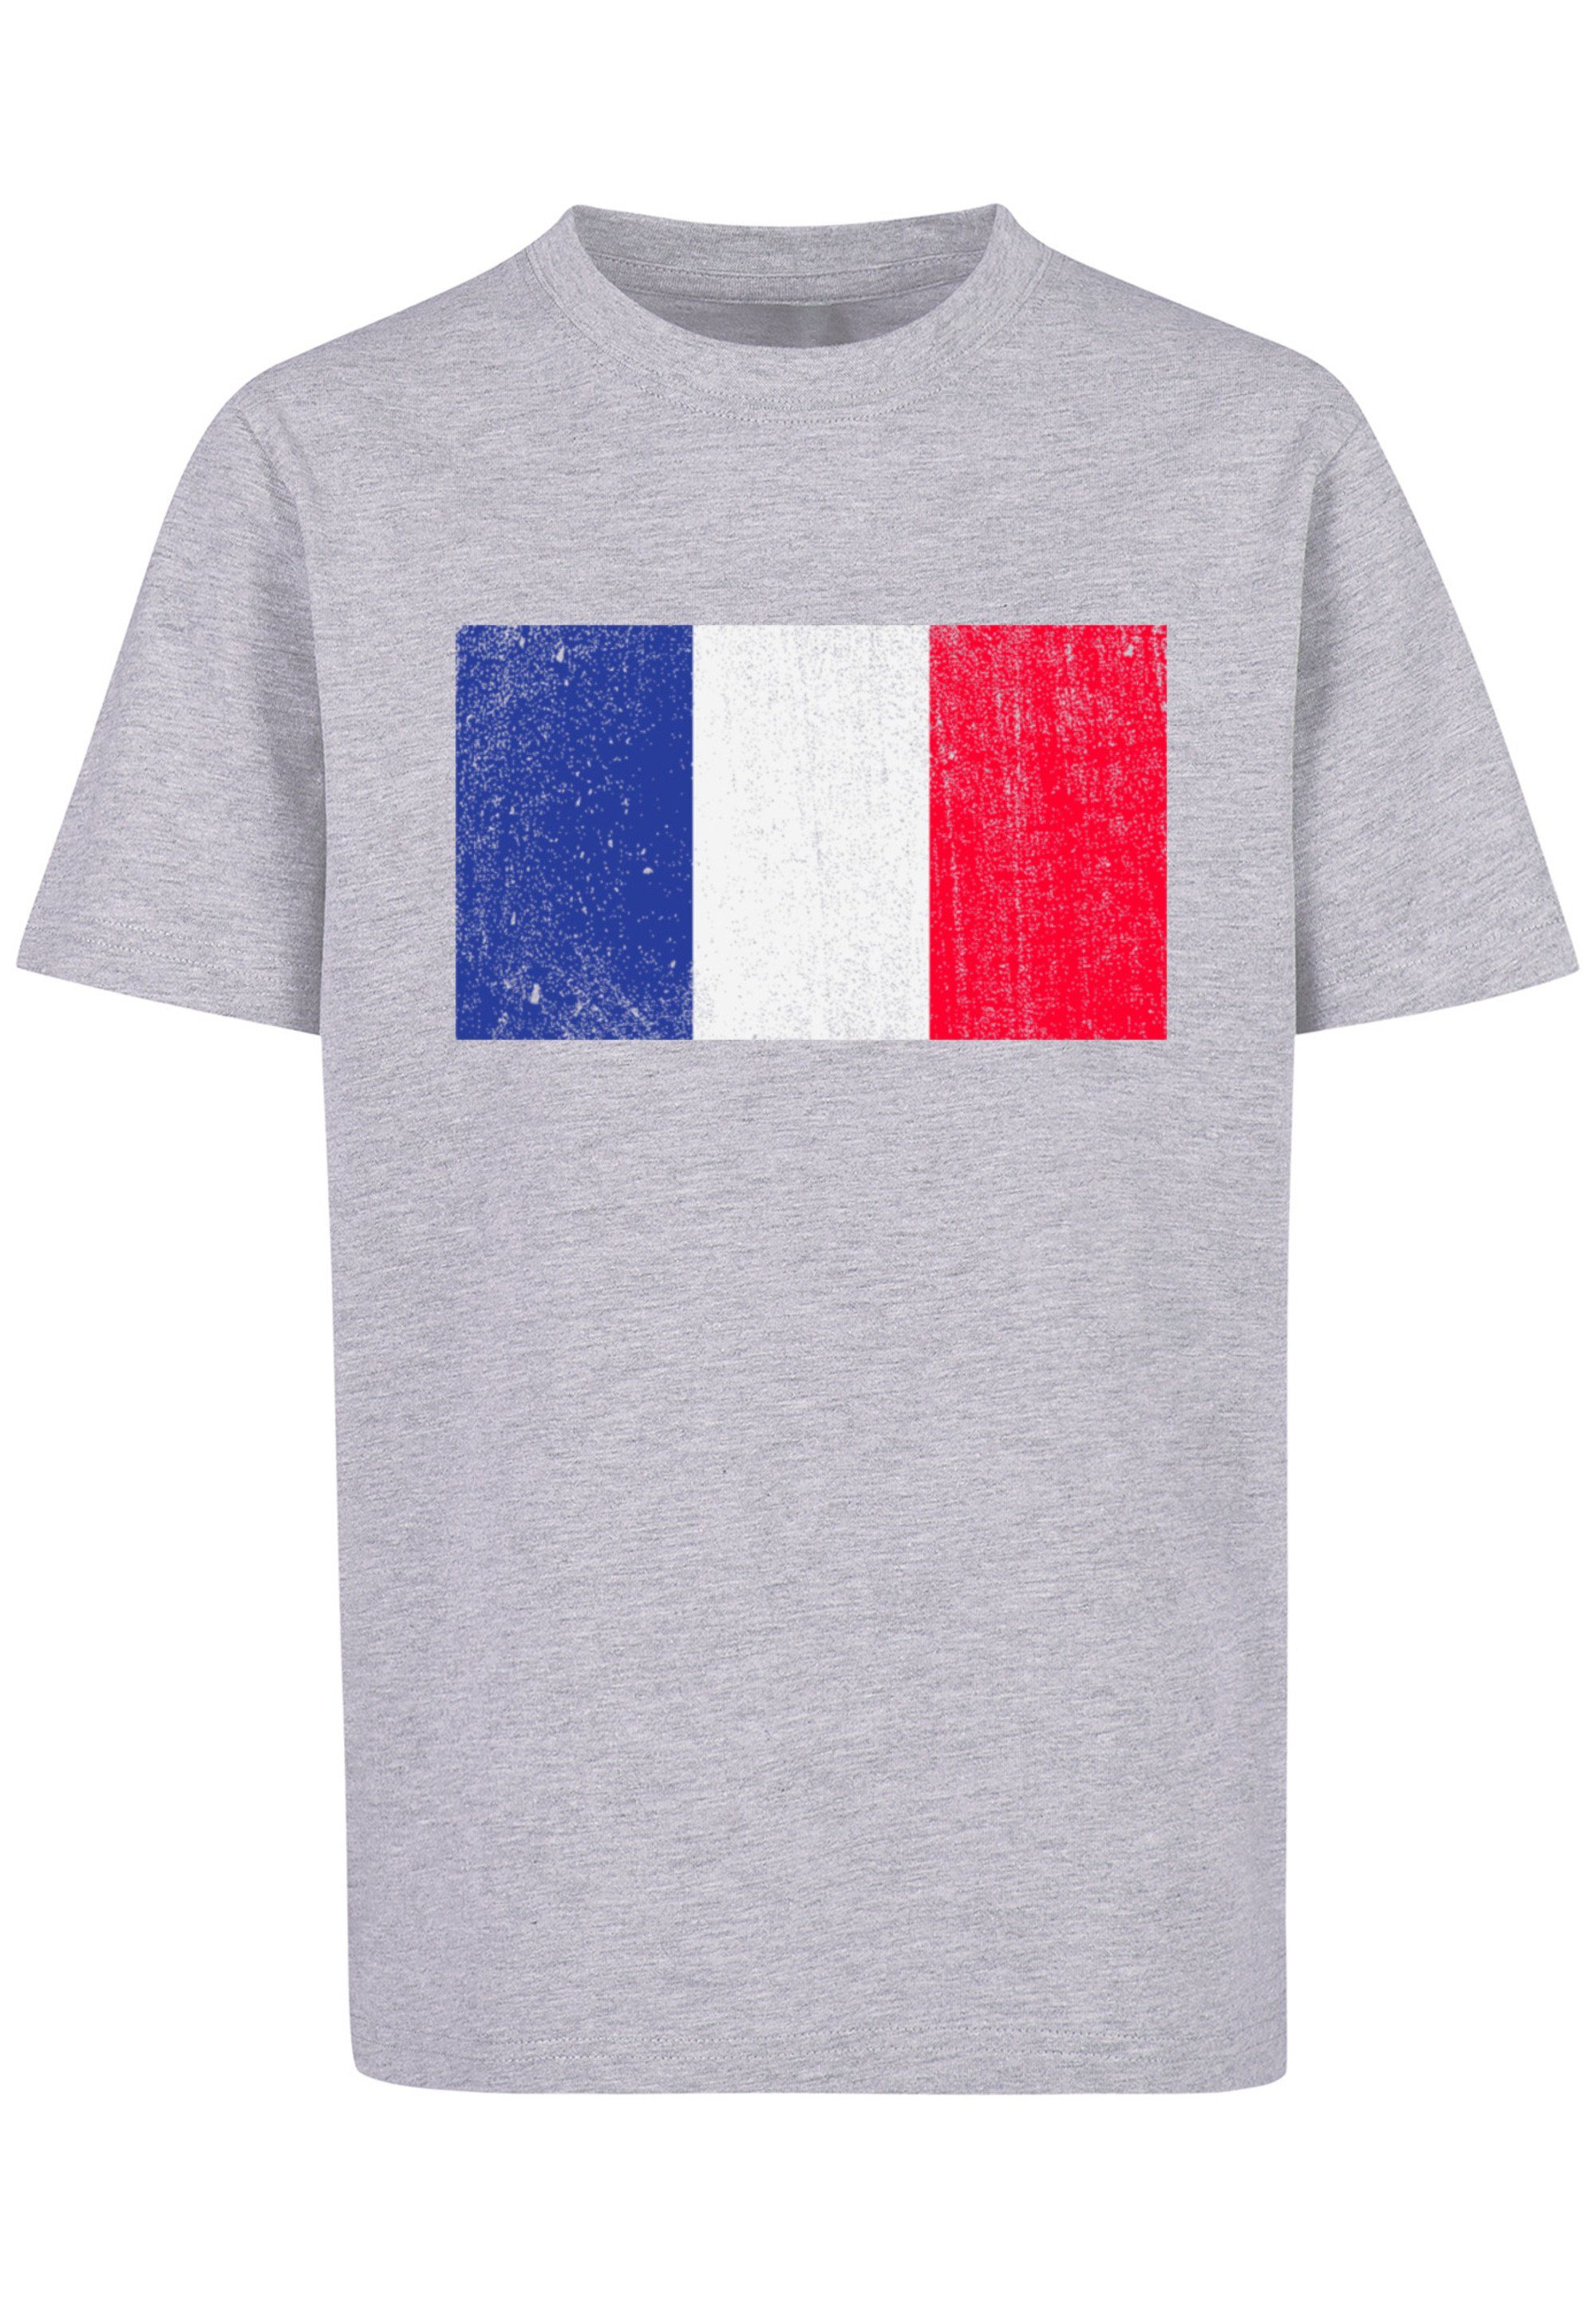 distressed France cm 145 Print, trägt groß T-Shirt ist Flagge Frankreich 145/152 und F4NT4STIC Model Das Größe